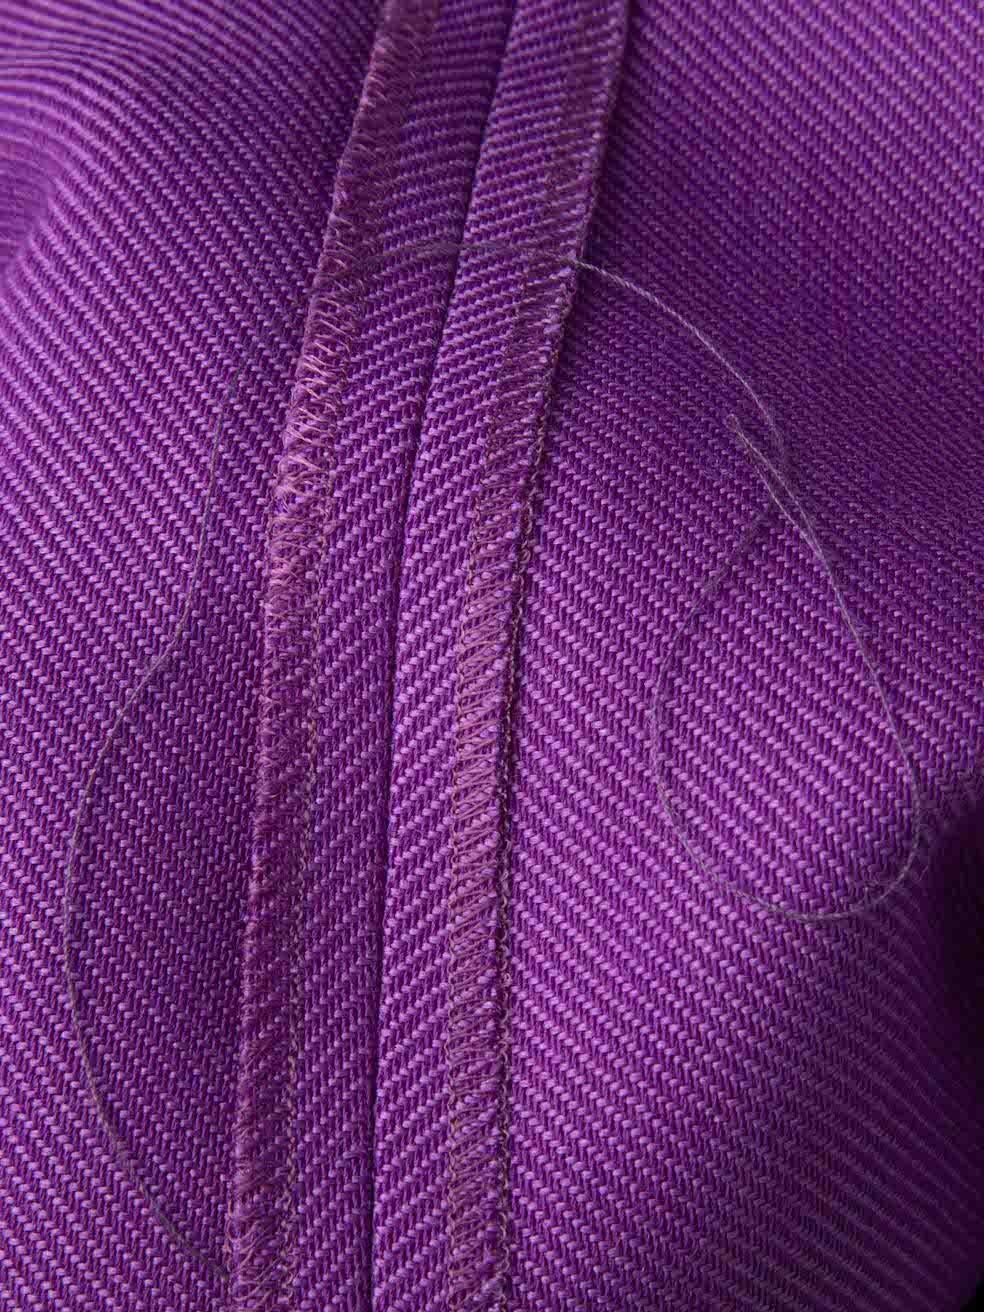 Women's Oscar de la Renta Green & Purple Silk Abstract Print Top & Trousers Set Size L